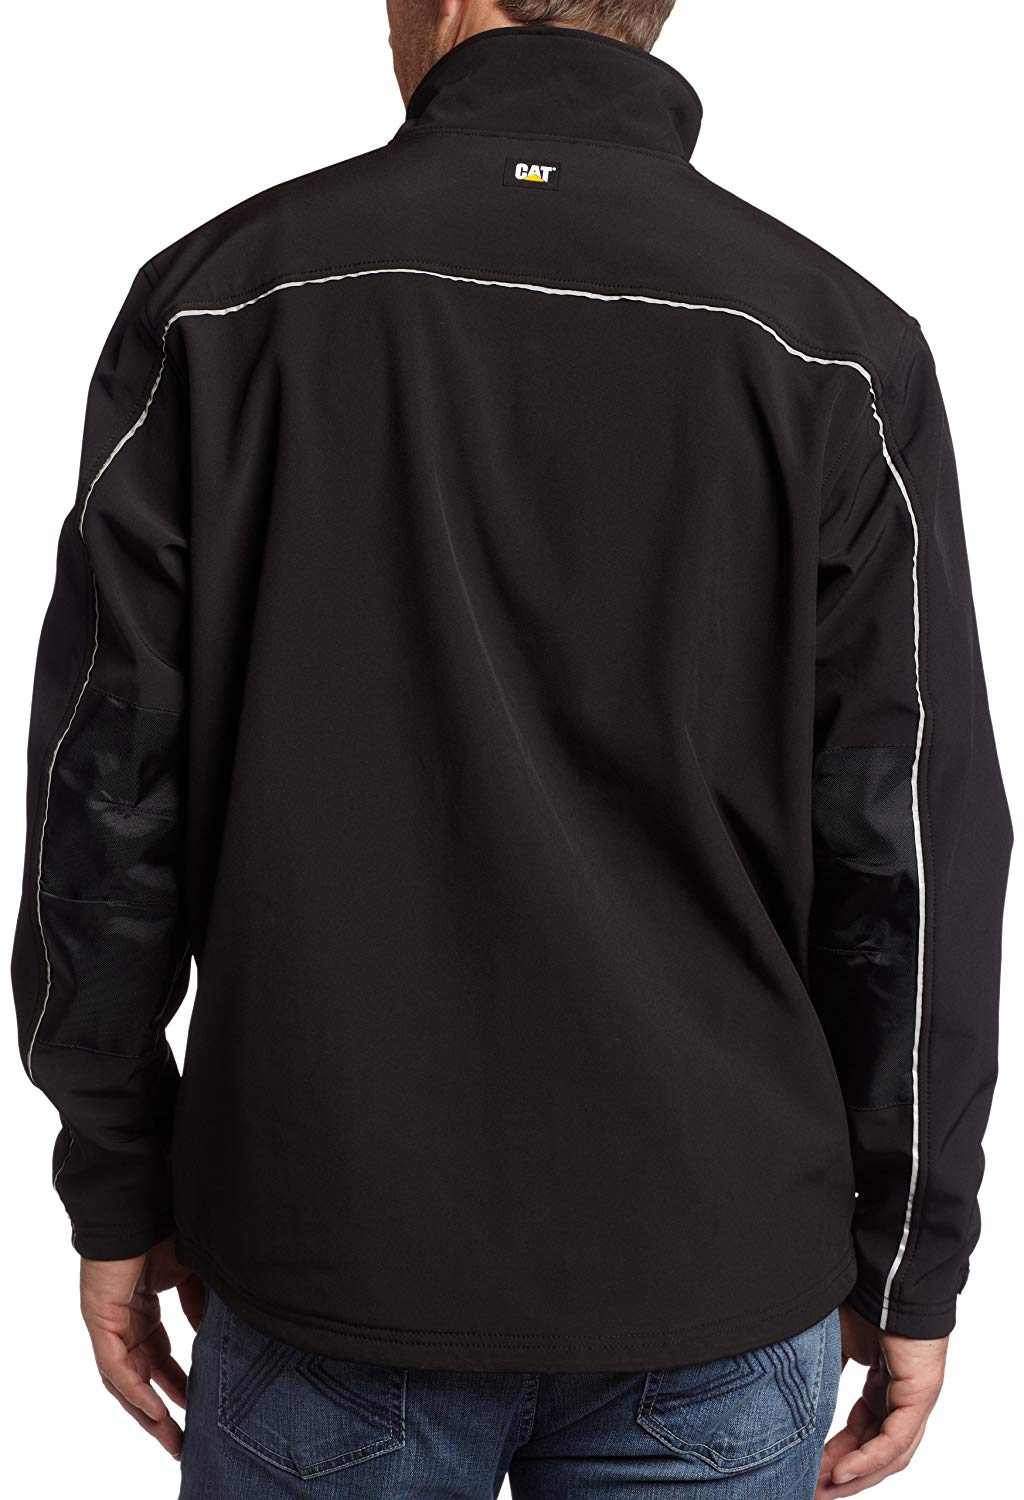 CAT W11440-016-XL All Season Soft Shell Jacket, Black, Extra-Large